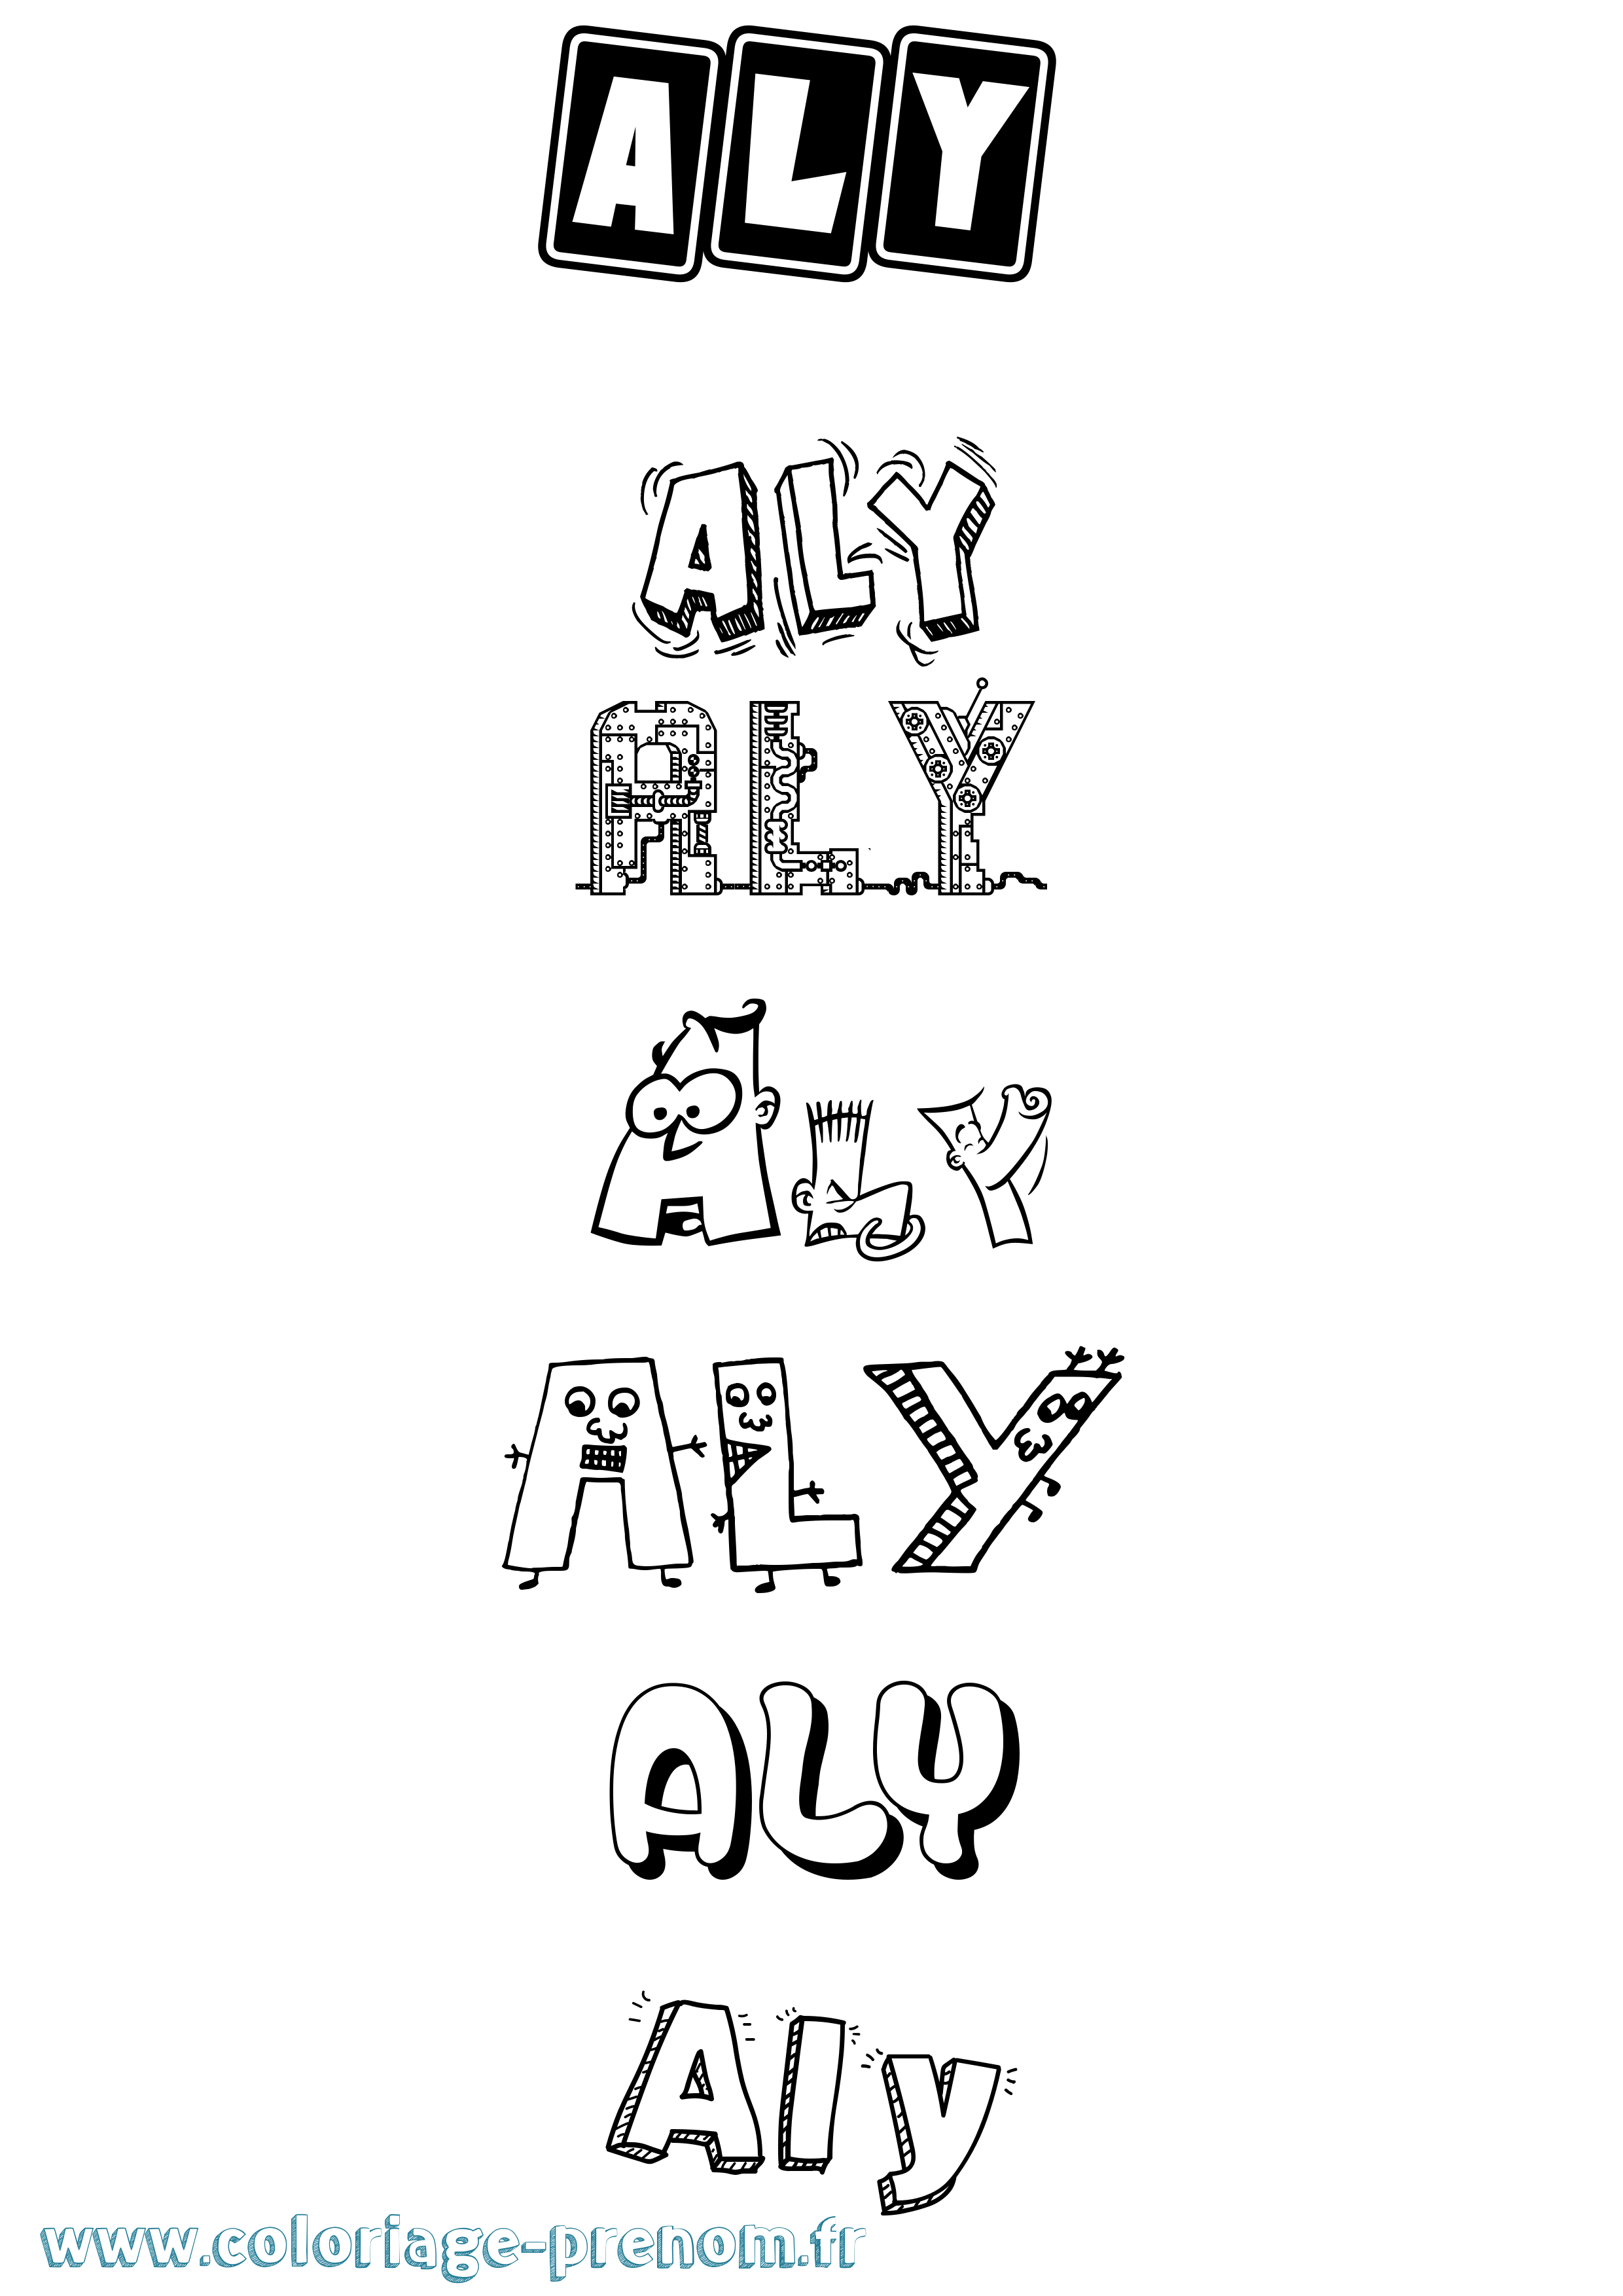 Coloriage prénom Aly Fun